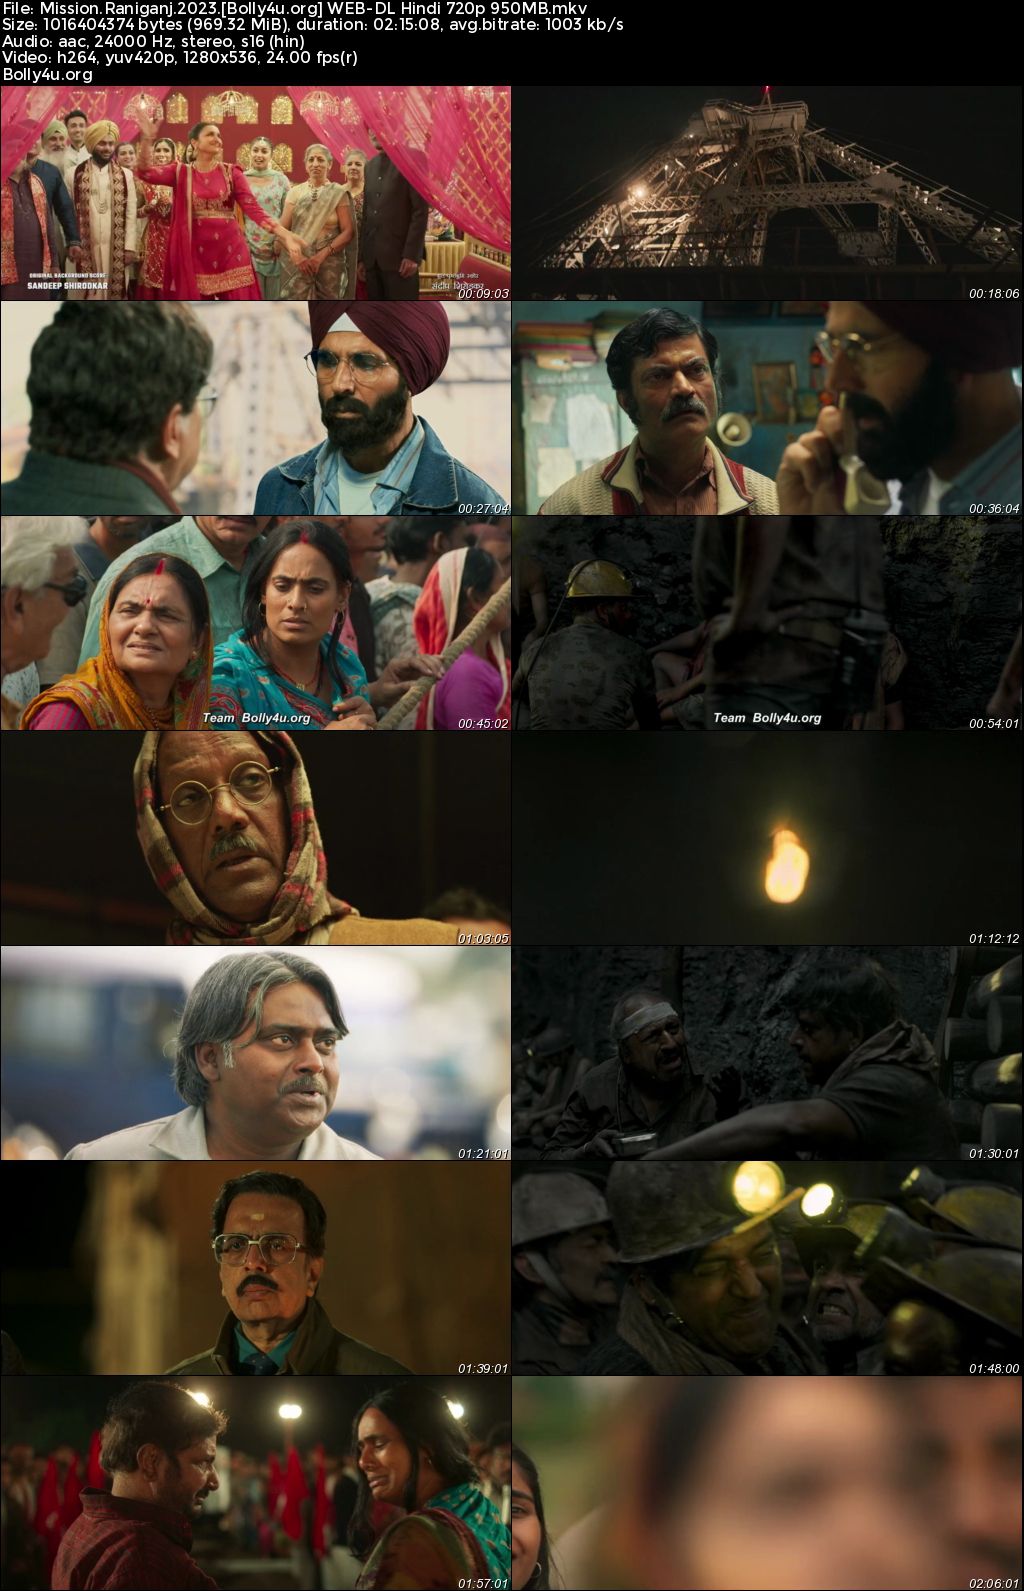 Mission Raniganj 2023 WEB-DL Hindi Full Movie Download 1080p 720p 480p